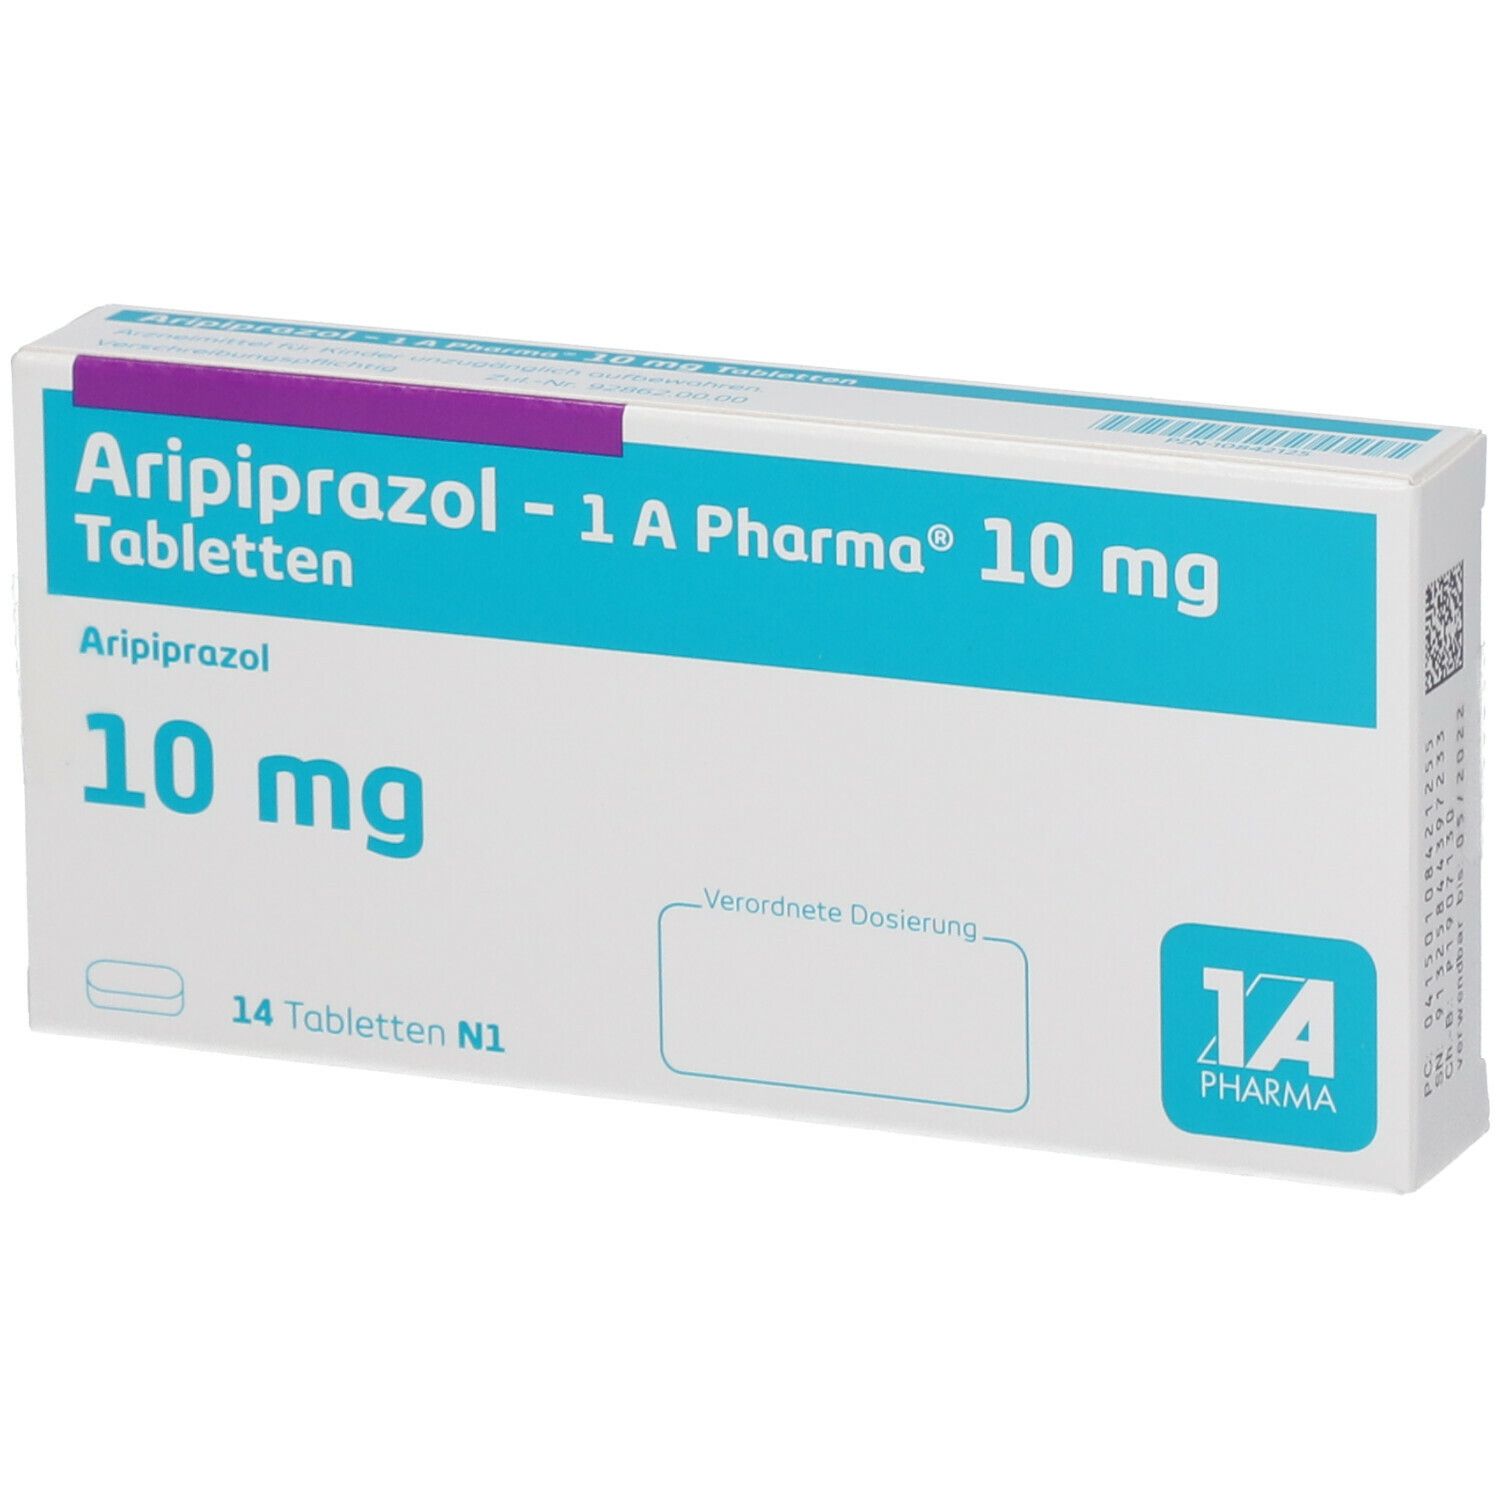 Aripiprazol - 1 A Pharma® 10 mg